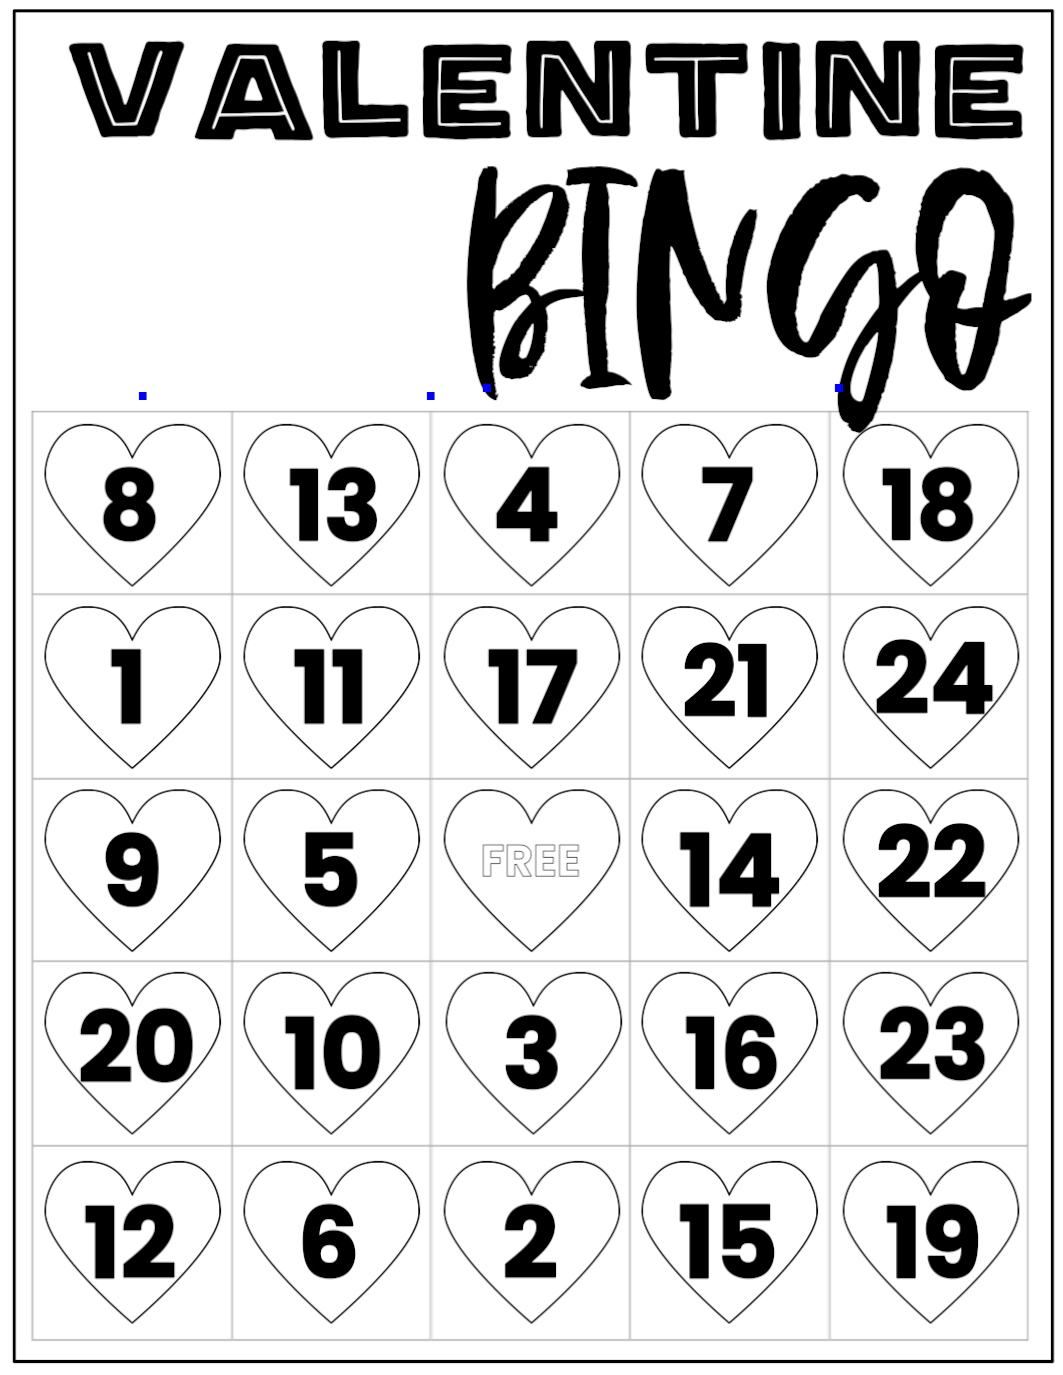 Free Valentine Bingo Printable Cards Paper Trail Design